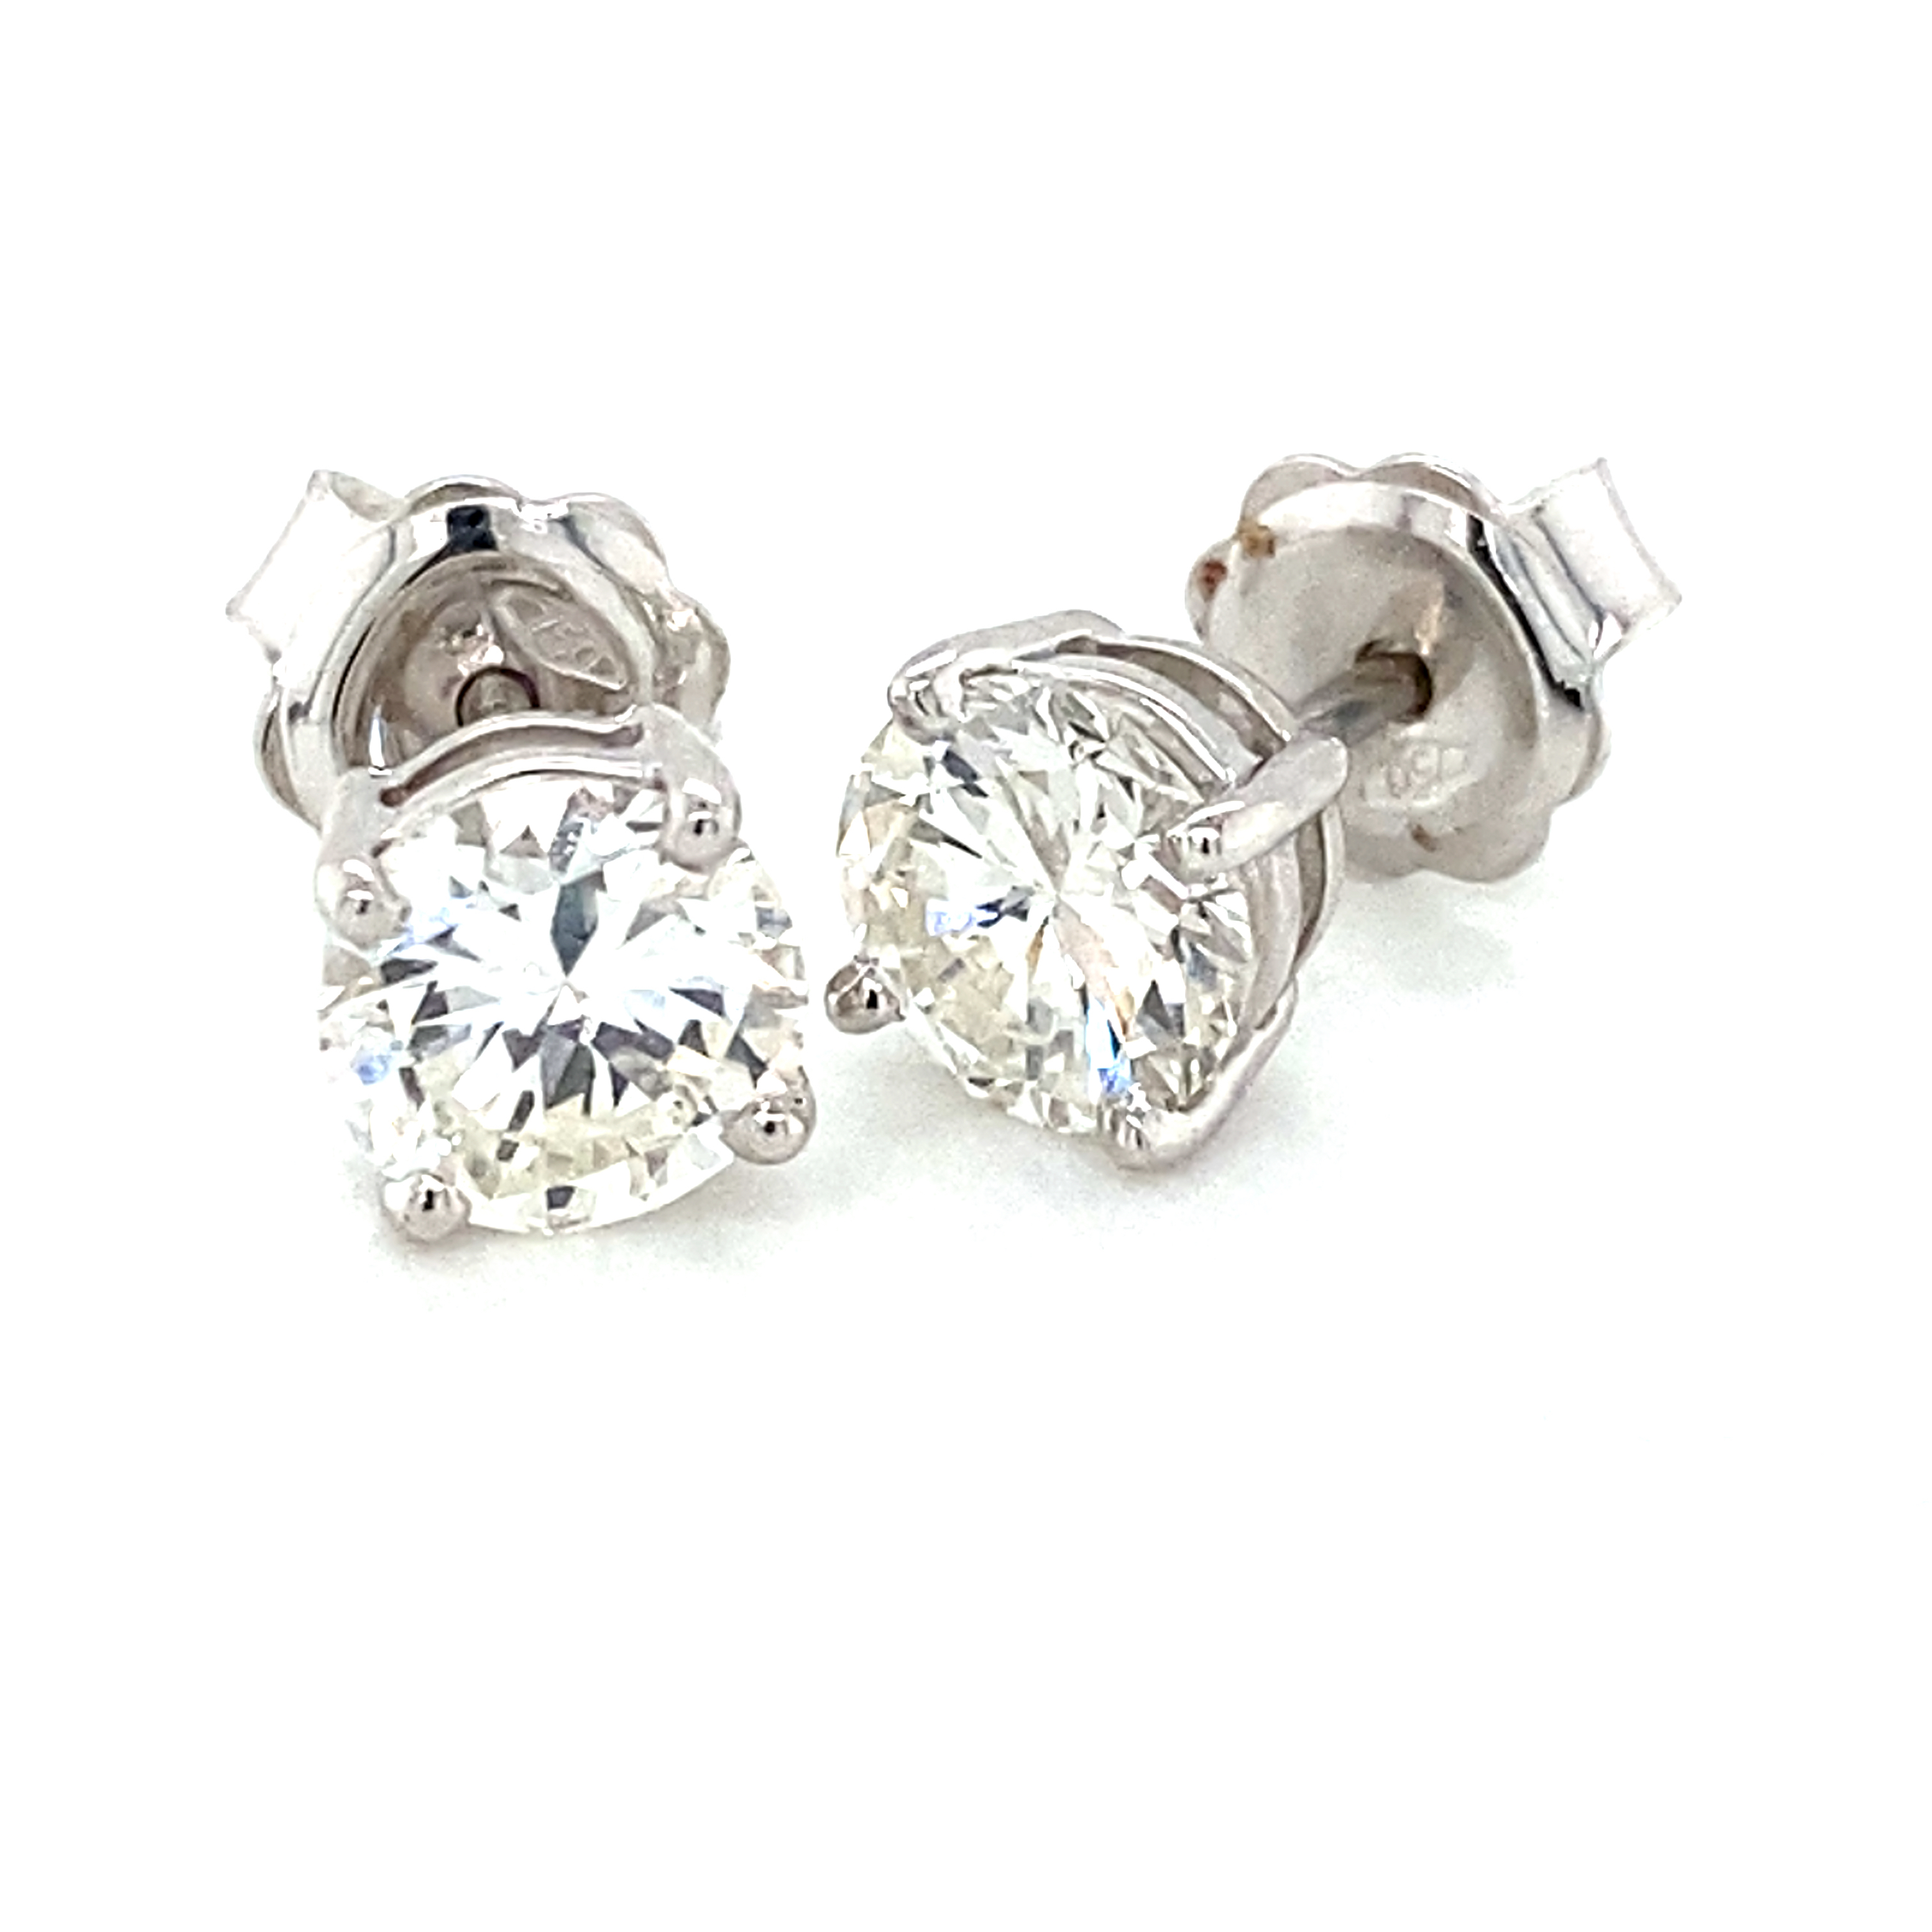 A Stunning Pair of Single Stone Diamond Studs 2.11 Carats